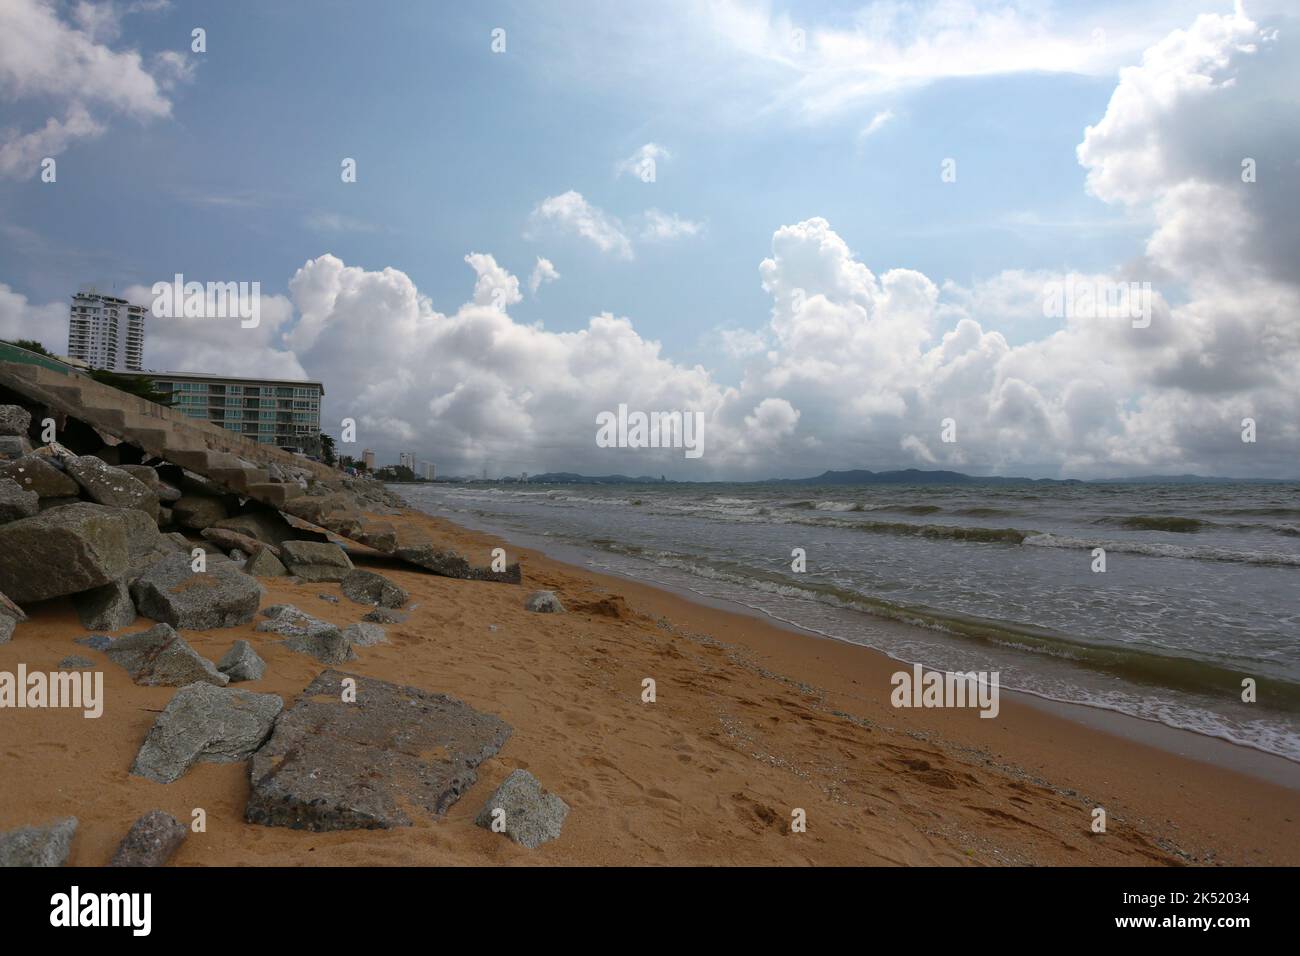 View of Jomtien Beach in the daytime, a popular tourist destination in Chonburi province, Thailand. Stock Photo